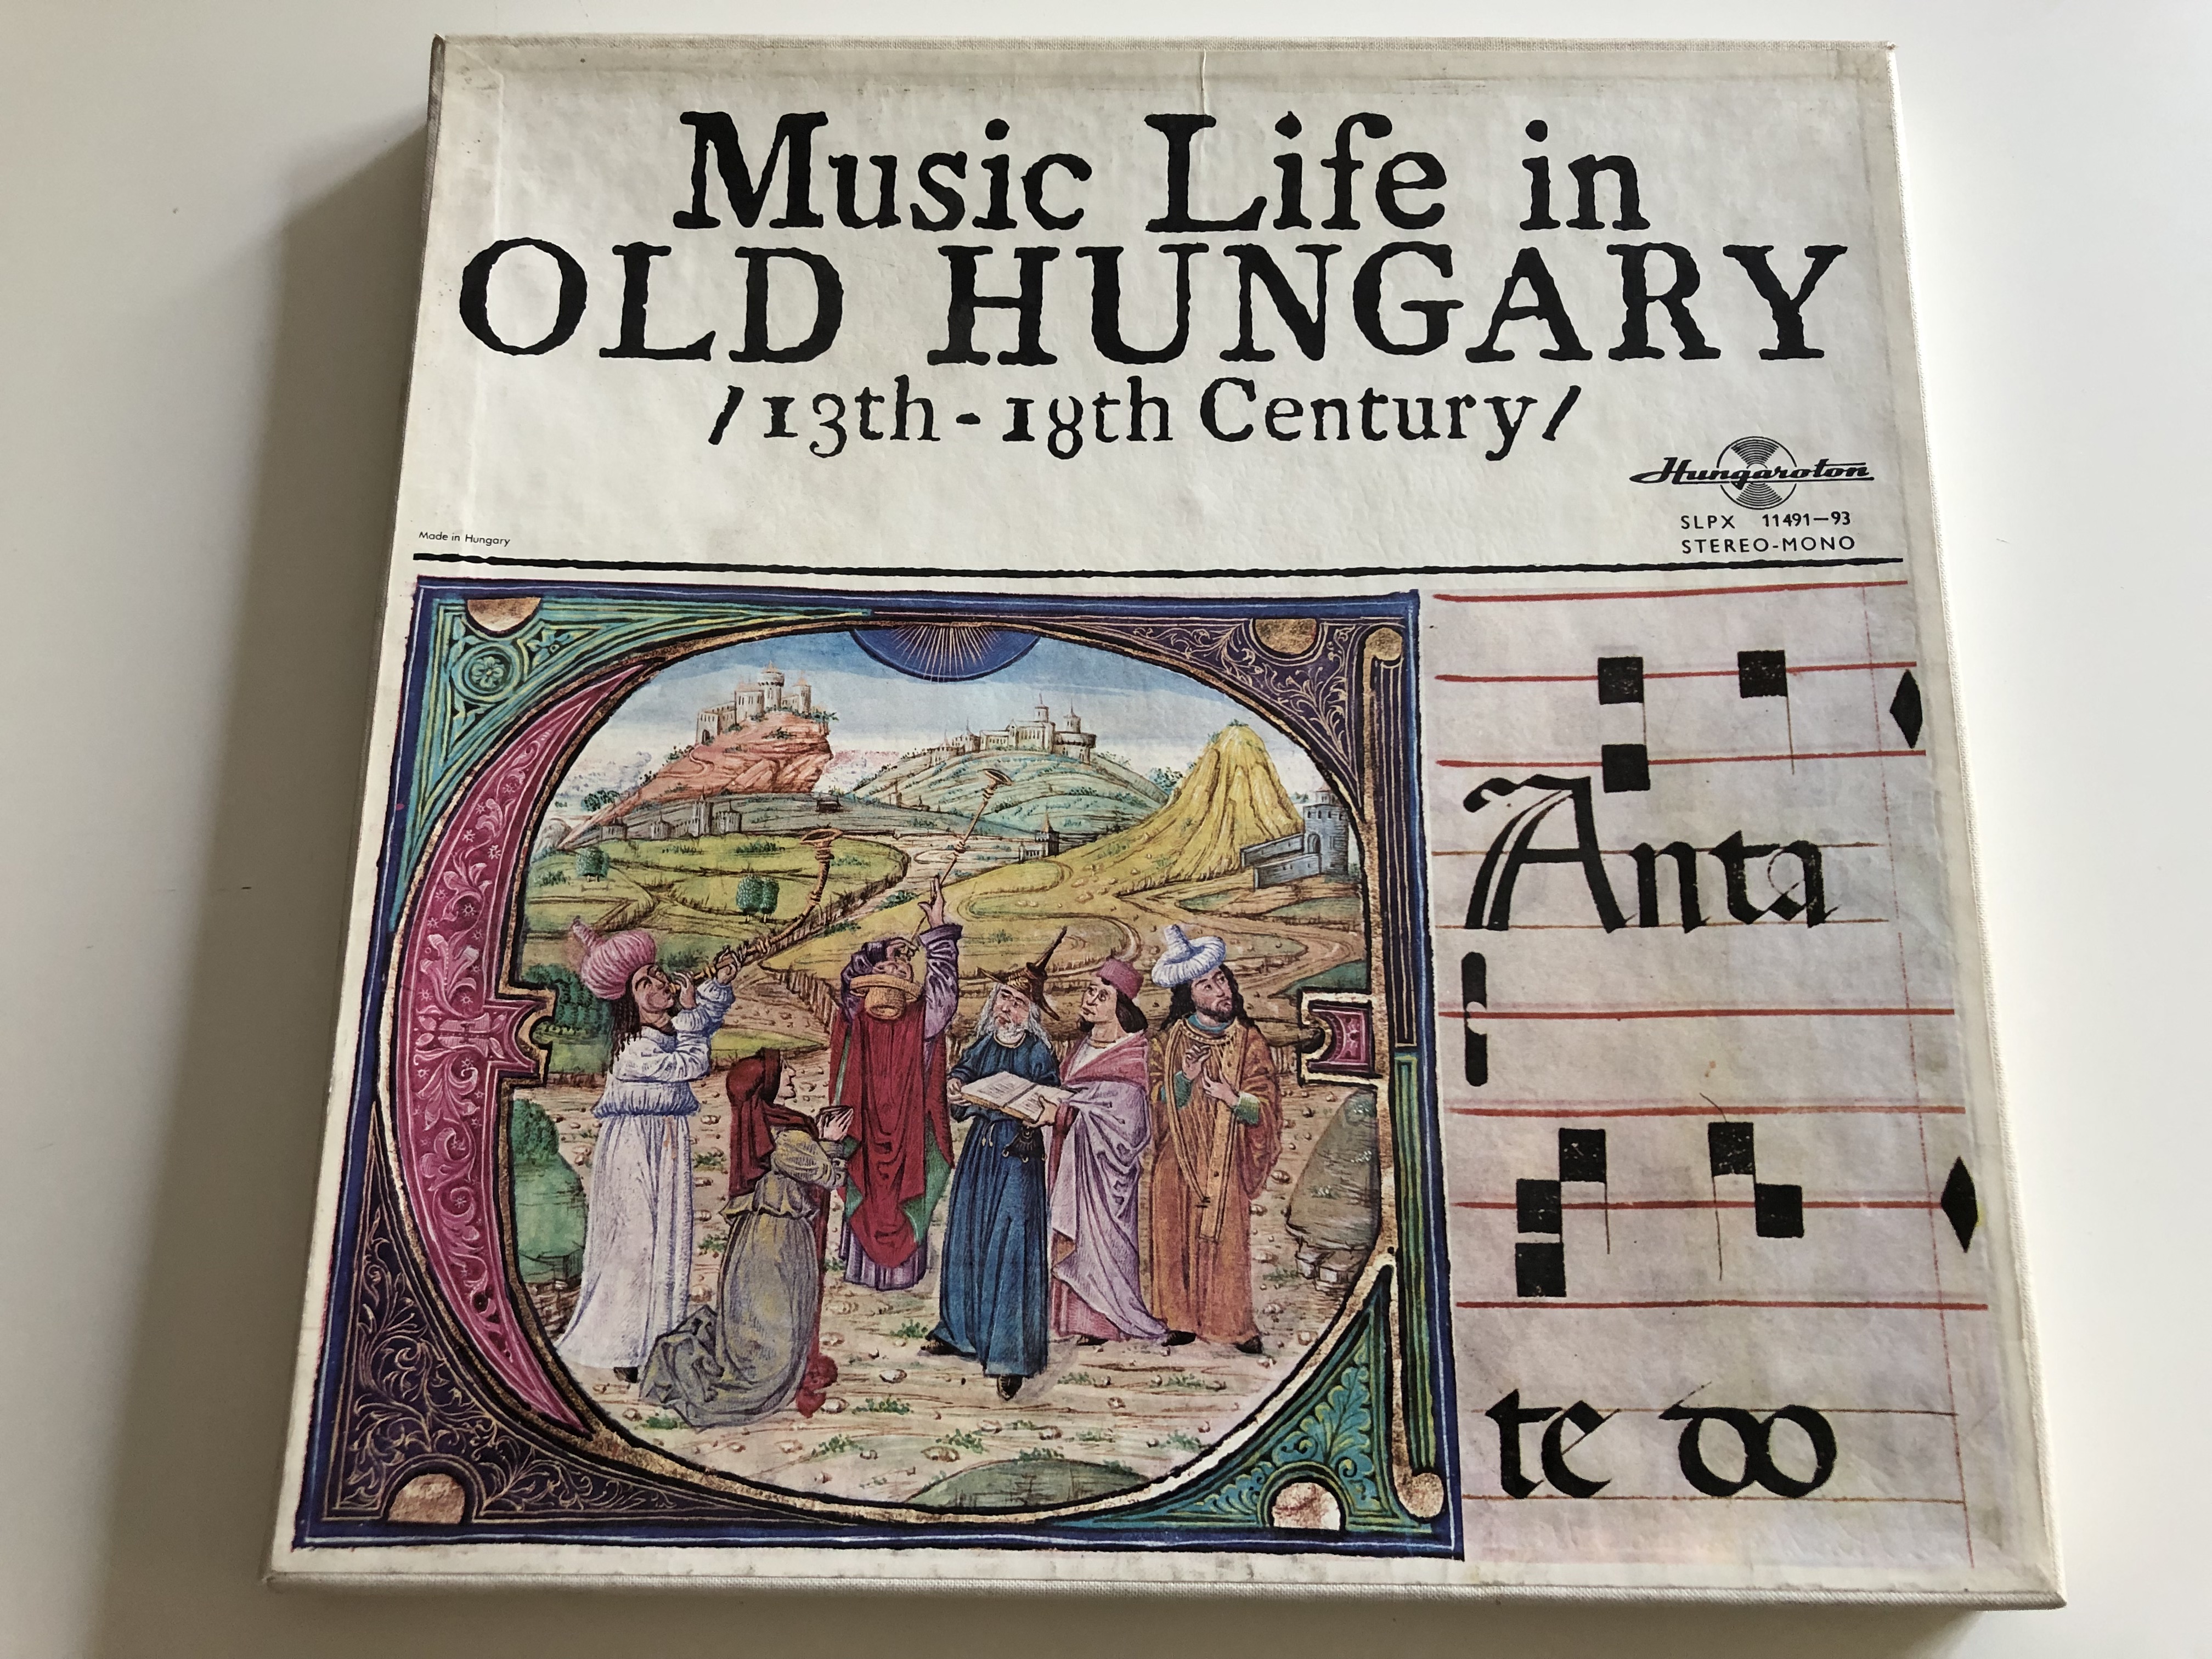 music-life-in-old-hungary-13th-18th-century-conducted-frigyes-s-ndor-istv-n-p-rkai-istv-n-kis-l-szl-dobszay-mikl-s-erd-lyi-hungaroton-3x-lp-stereo-mono-slpx-11491-93-1-.jpg